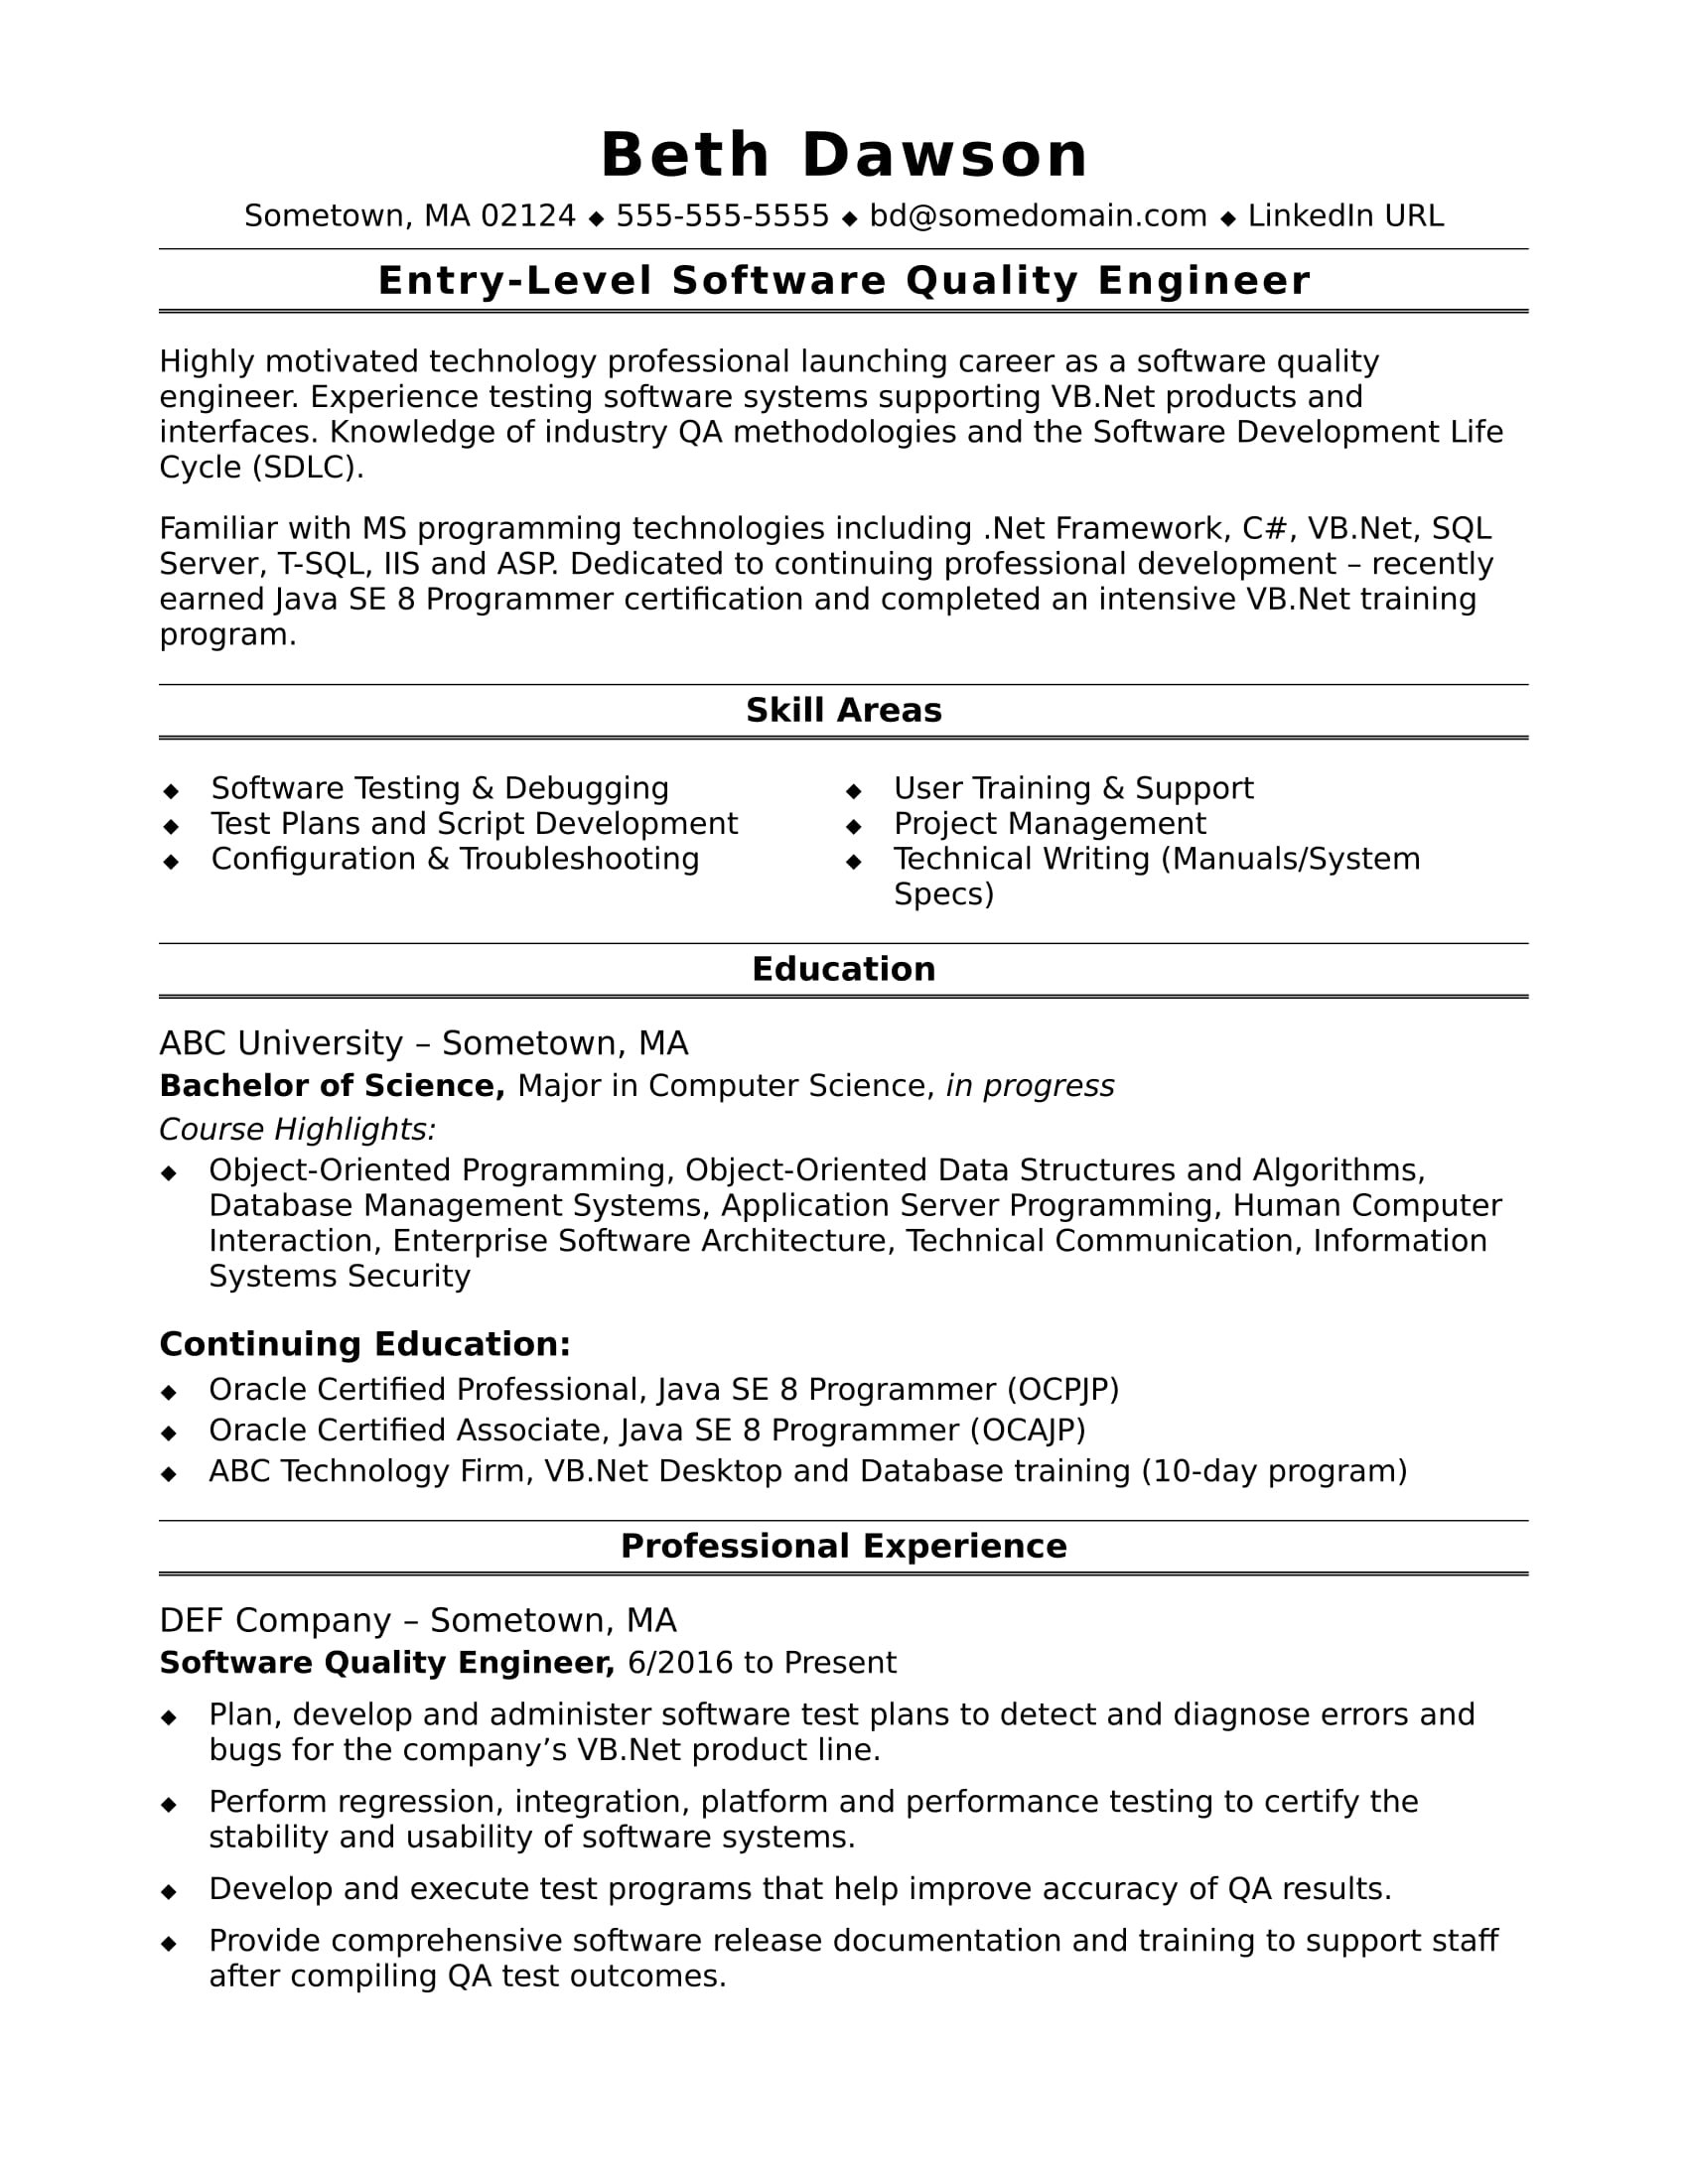 Sample Entry Level software Engineer Resume Sample Resume for An Entry-level Quality Engineer Monster.com